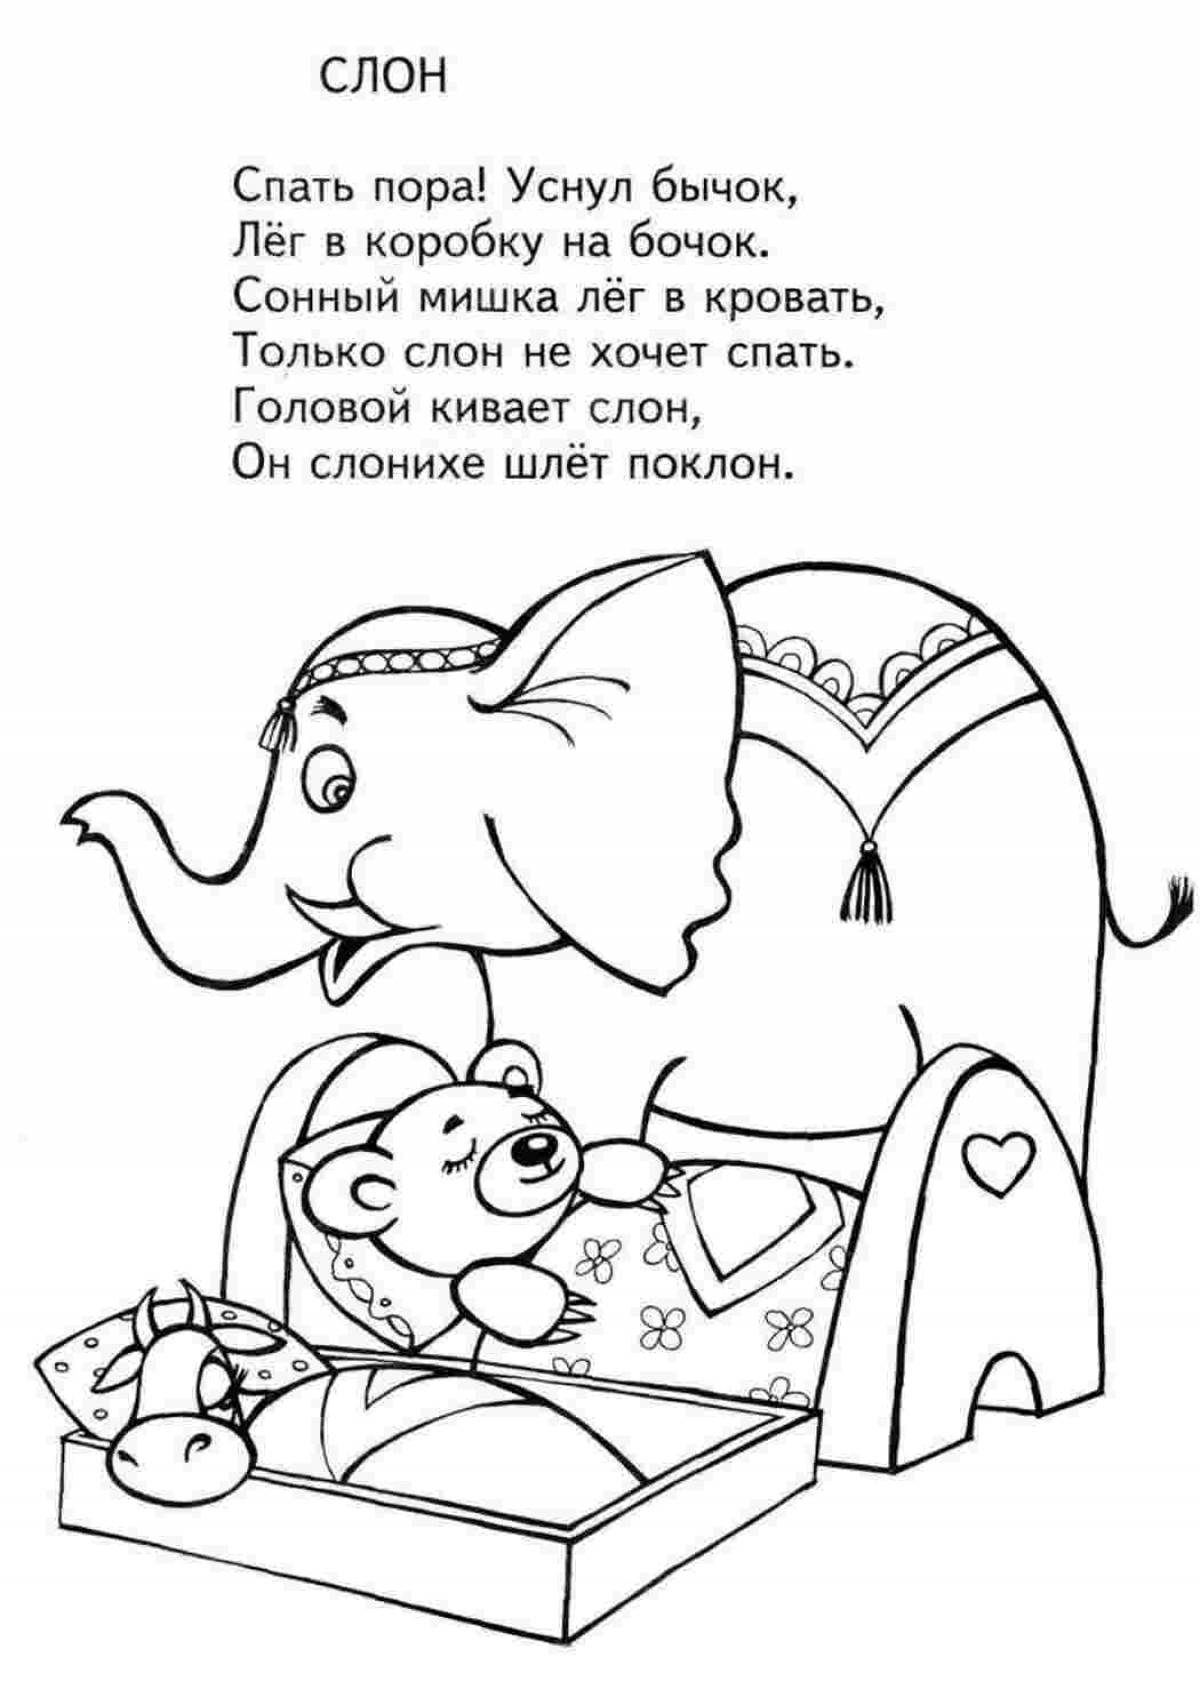 For preschoolers based on barto poetry #19